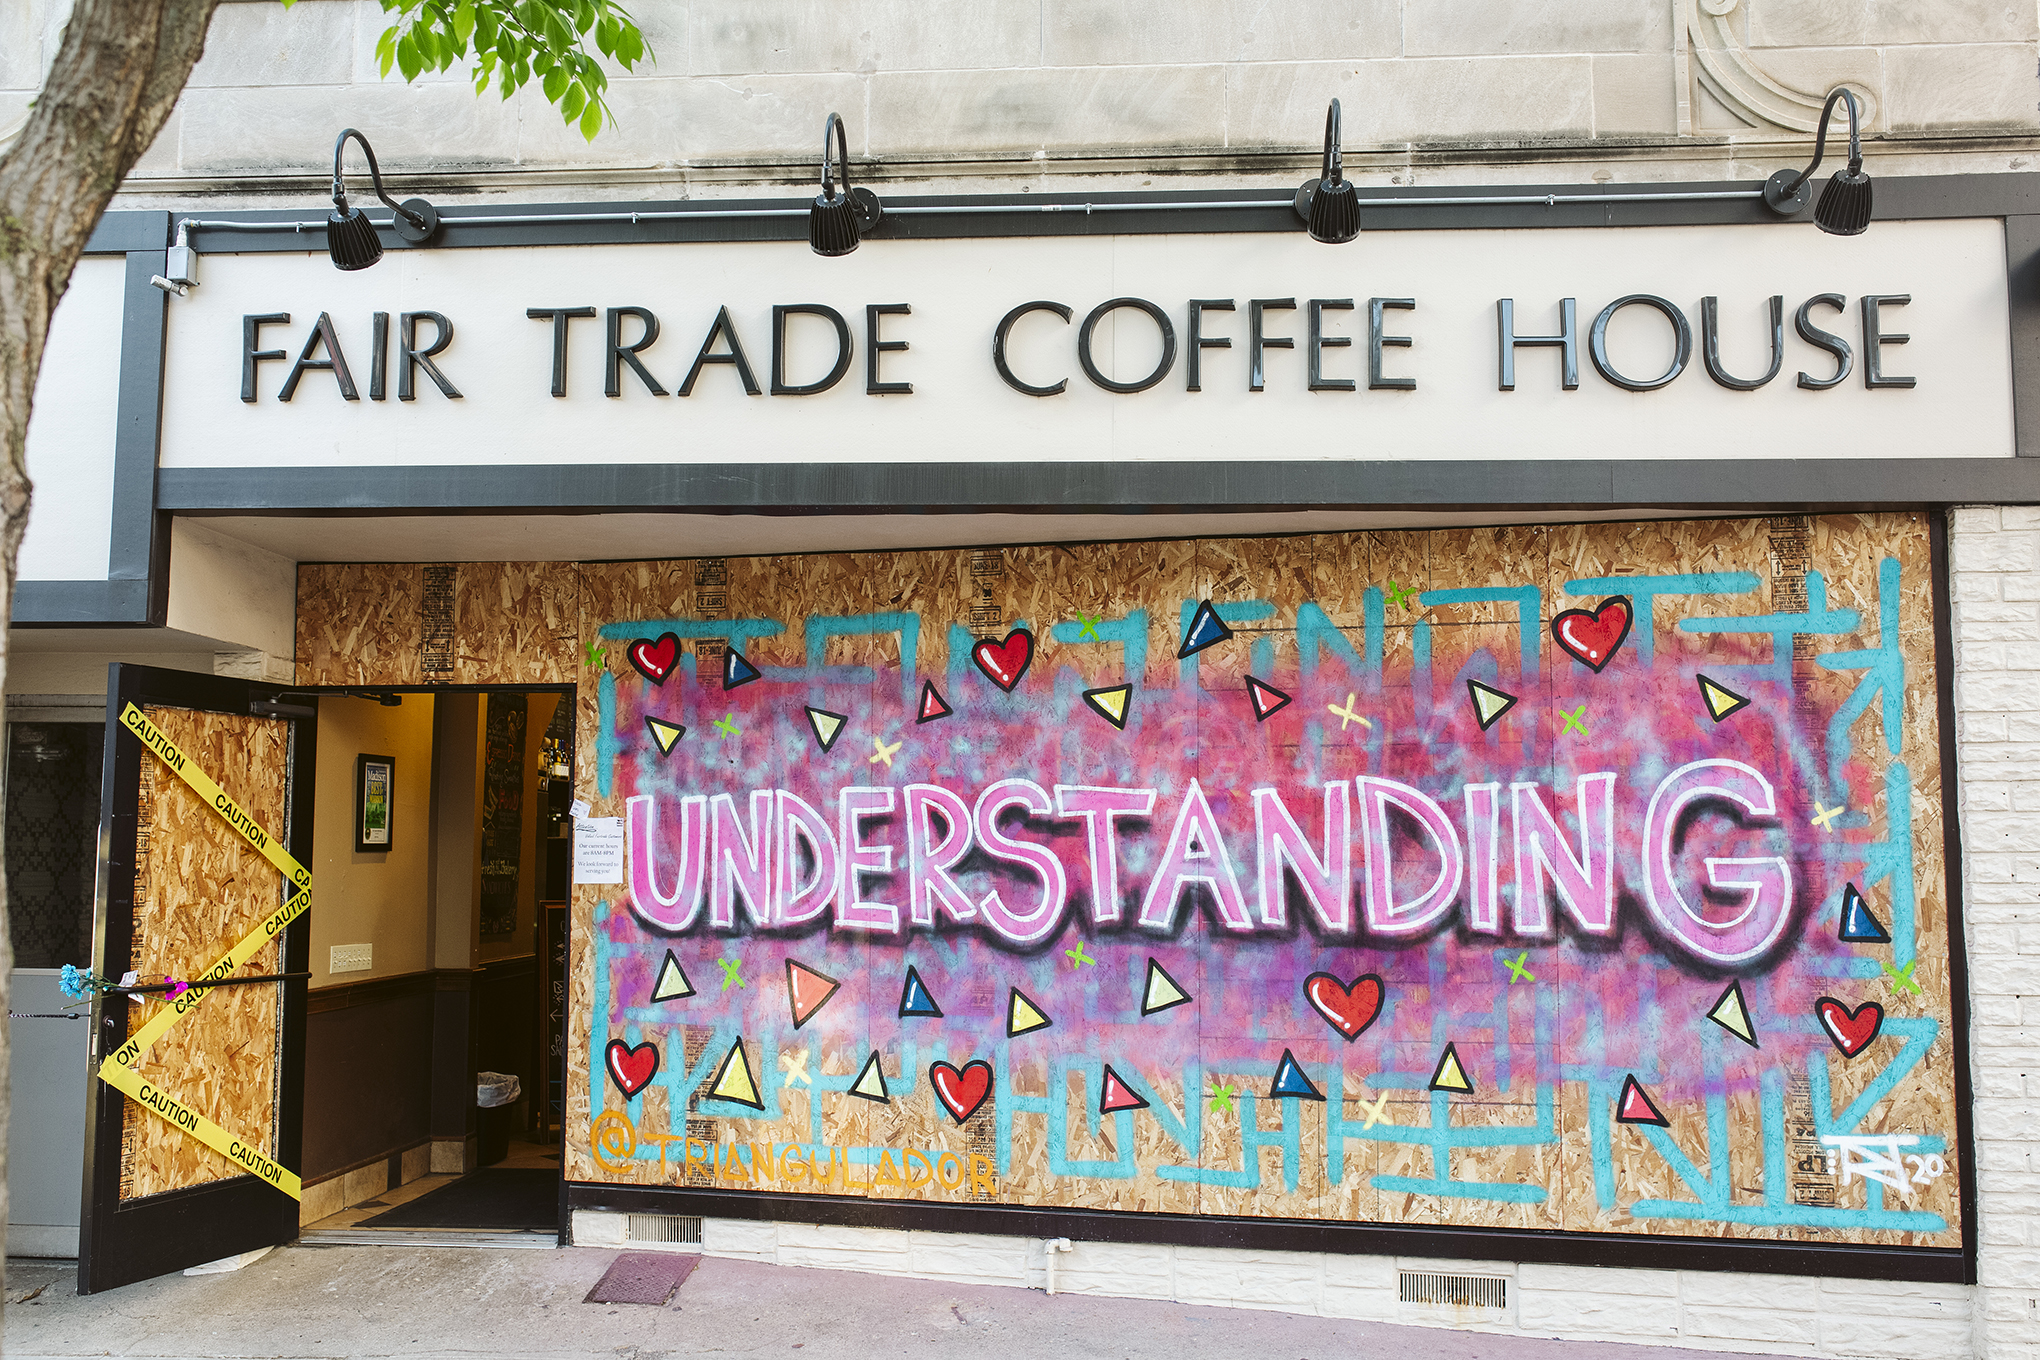 Madison street artist, Triangulador's artwork is displayed on Fair Trade Coffee House